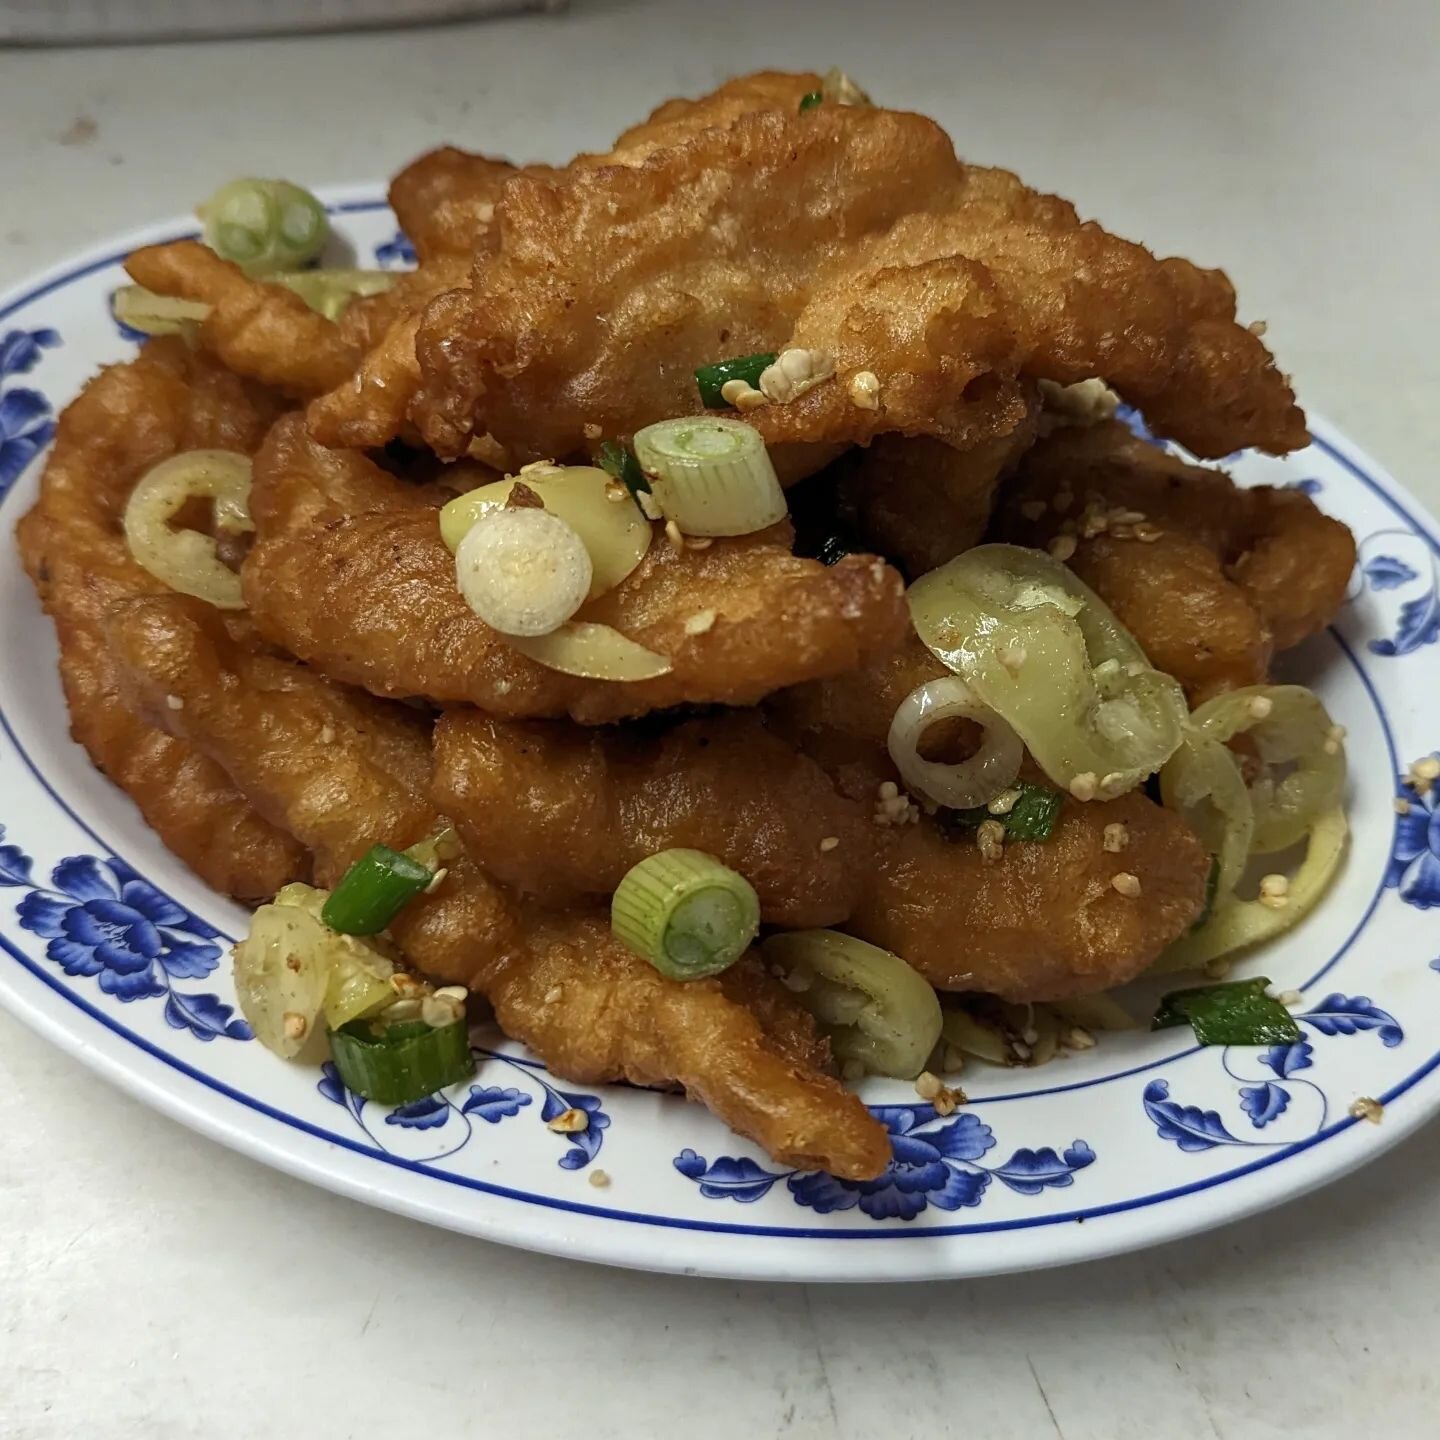 Salt n pepper fish 🐟

#luckychineserestaurant #elcentroca #eatlocal #food #foodporn #chinesefood #yum #smallbusiness #comidachina #localbusiness #localbusinesselcentro